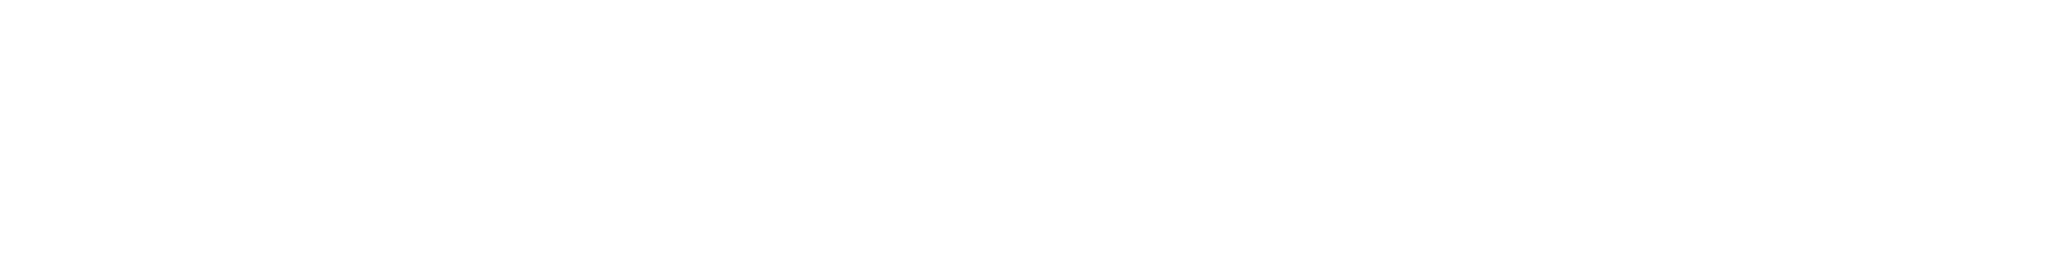 logo-finn-neu-2048x279